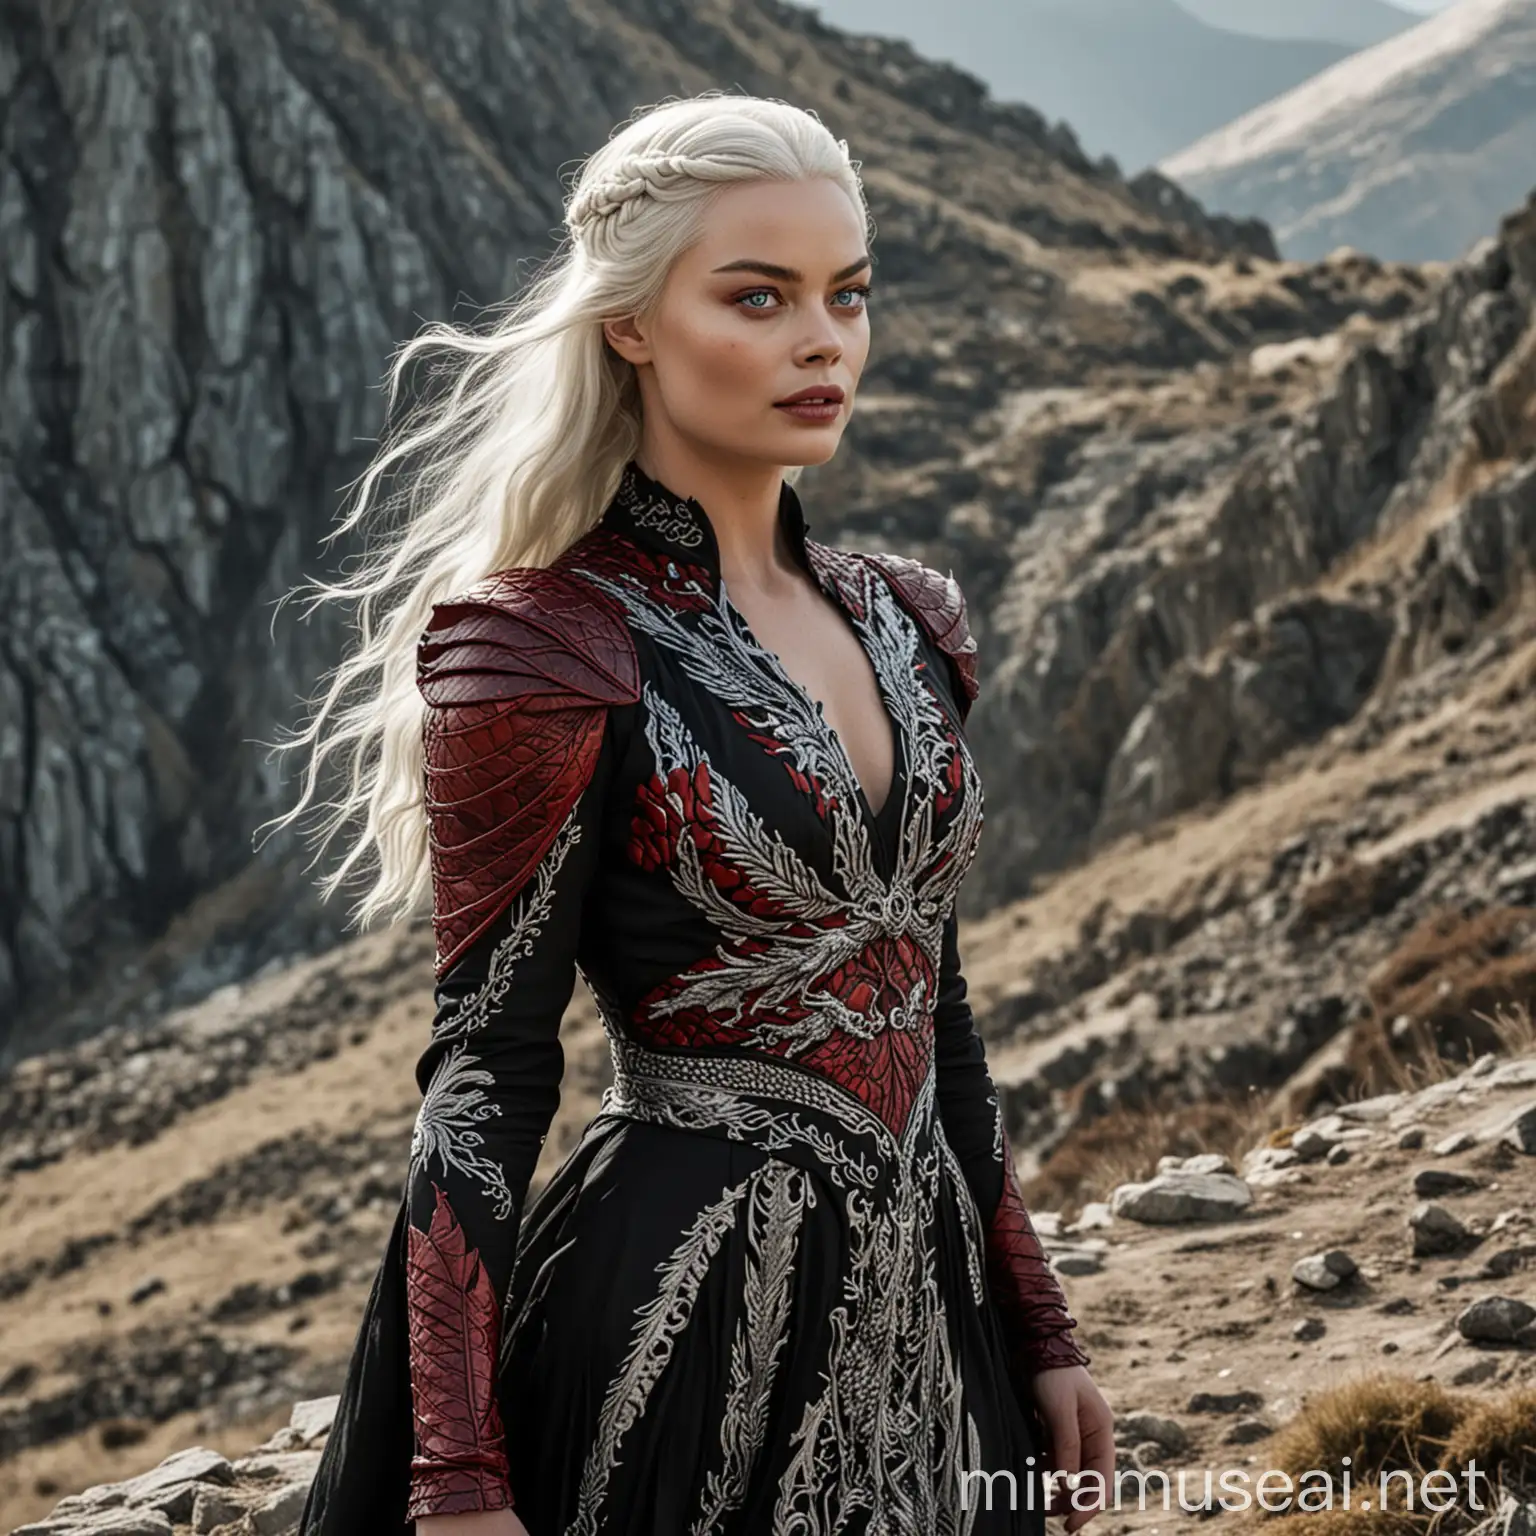 Margot Robbie as Targaryen Princess with Blue Eyes in Dragon Scale Dress Ascending Mountain Slope